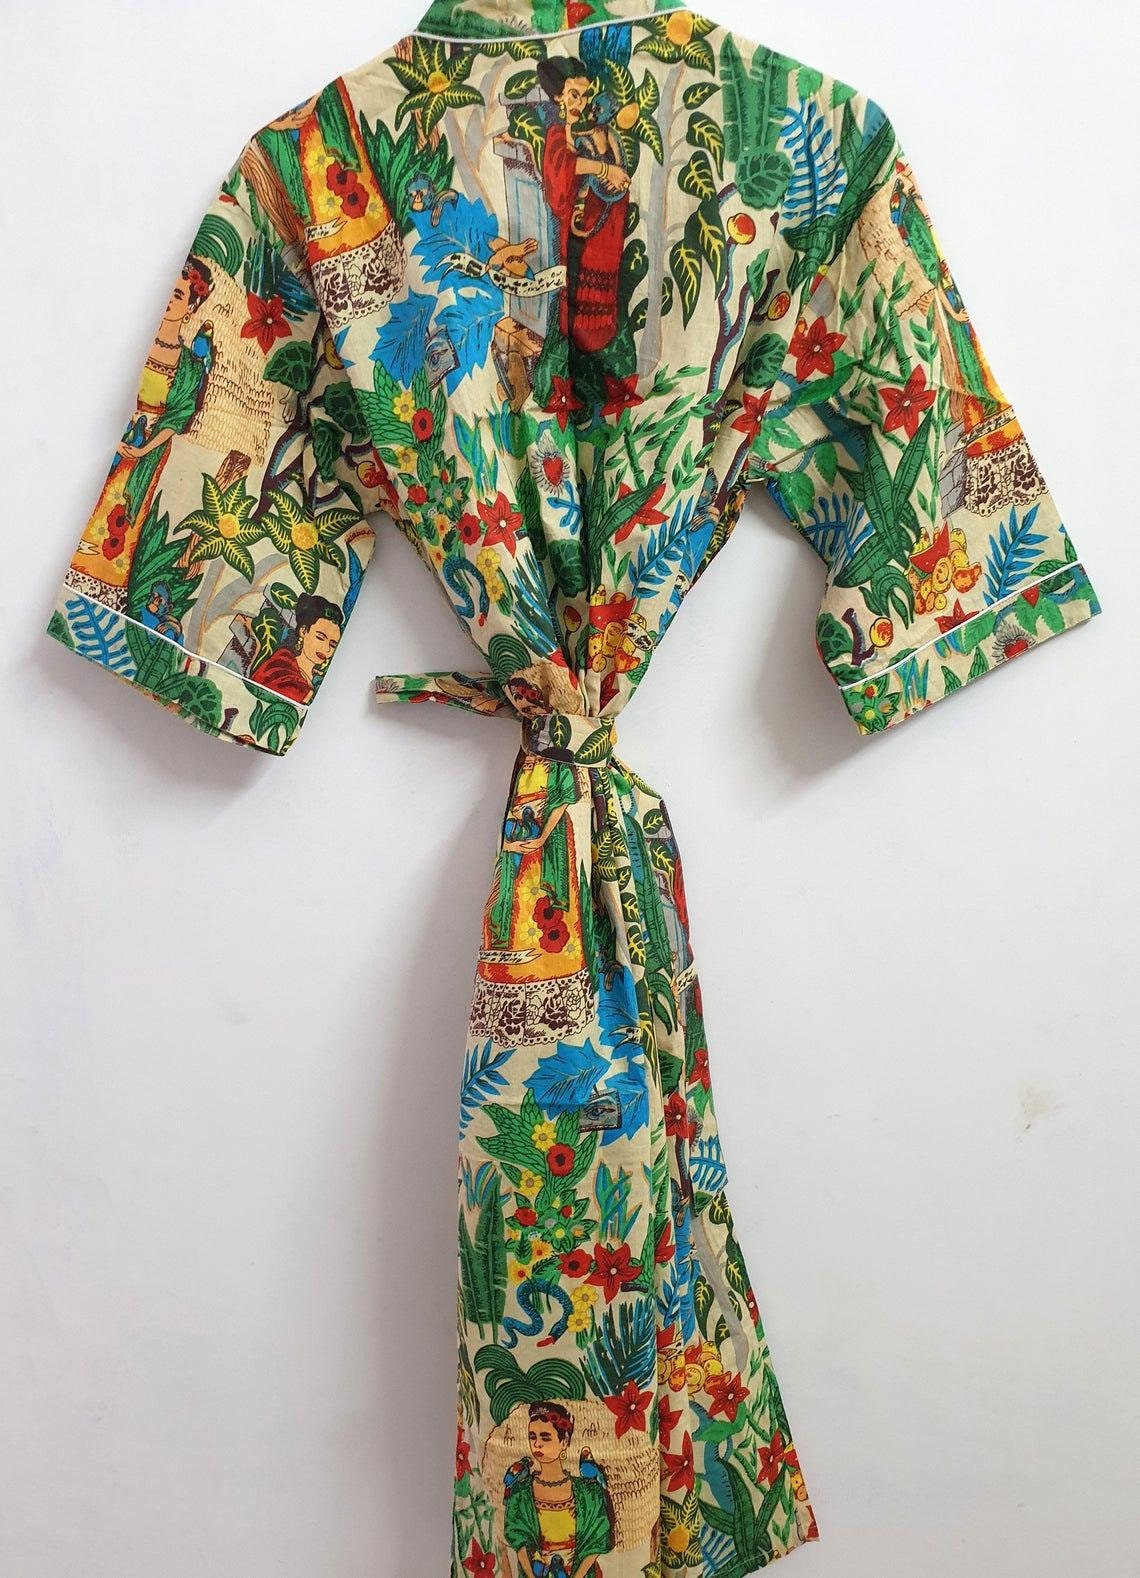 Large Free Size Cotton Bathrobe Women Kimono Beige Color | Etsy